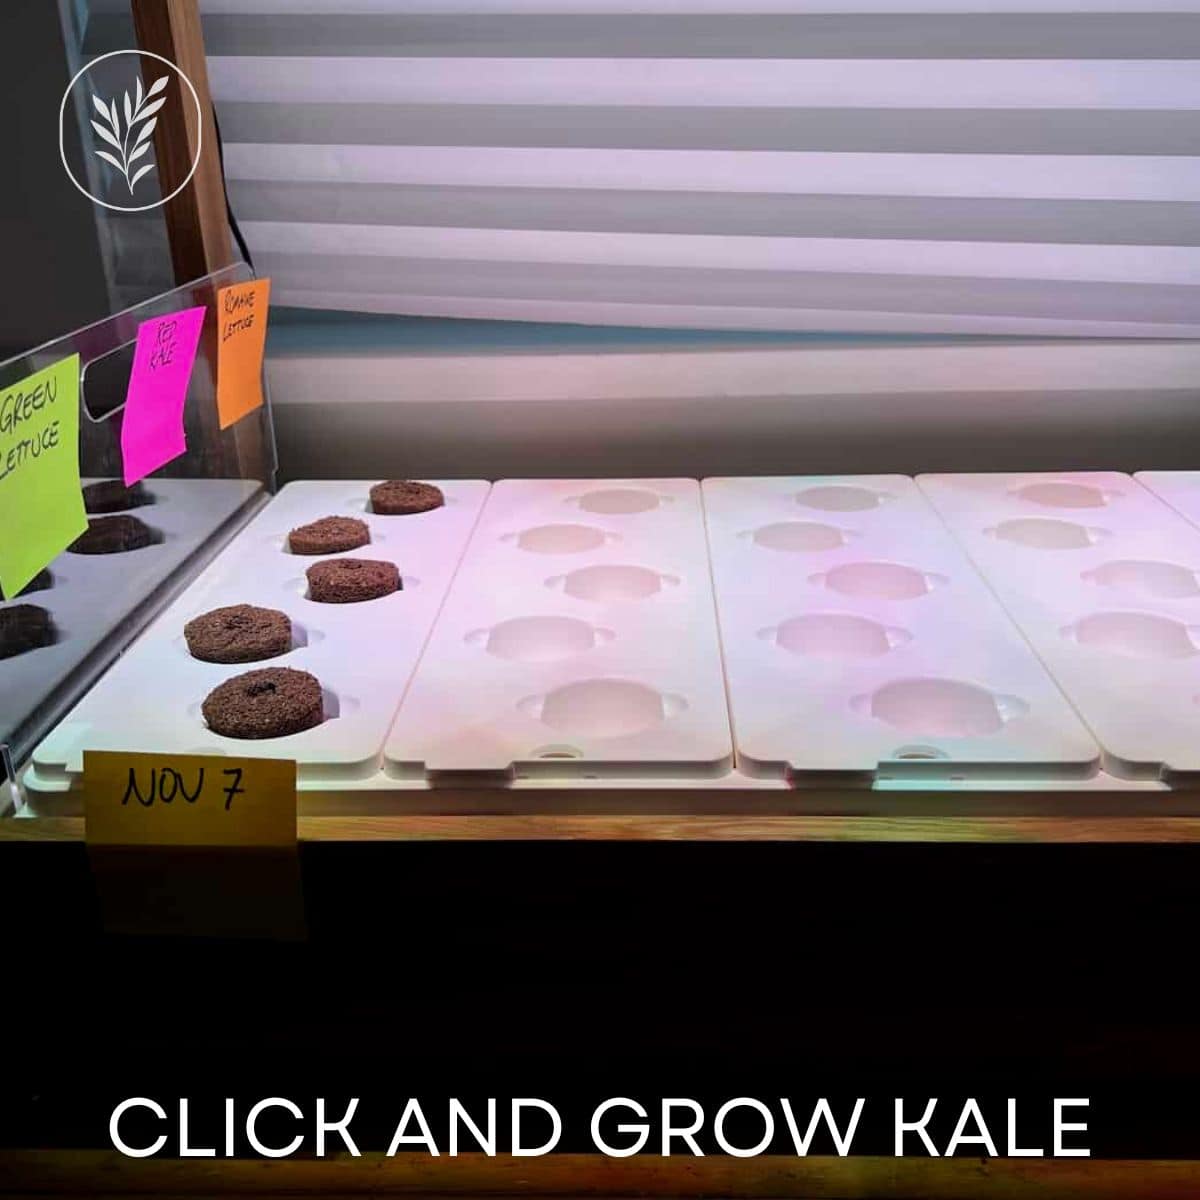 Click and grow kale via @home4theharvest